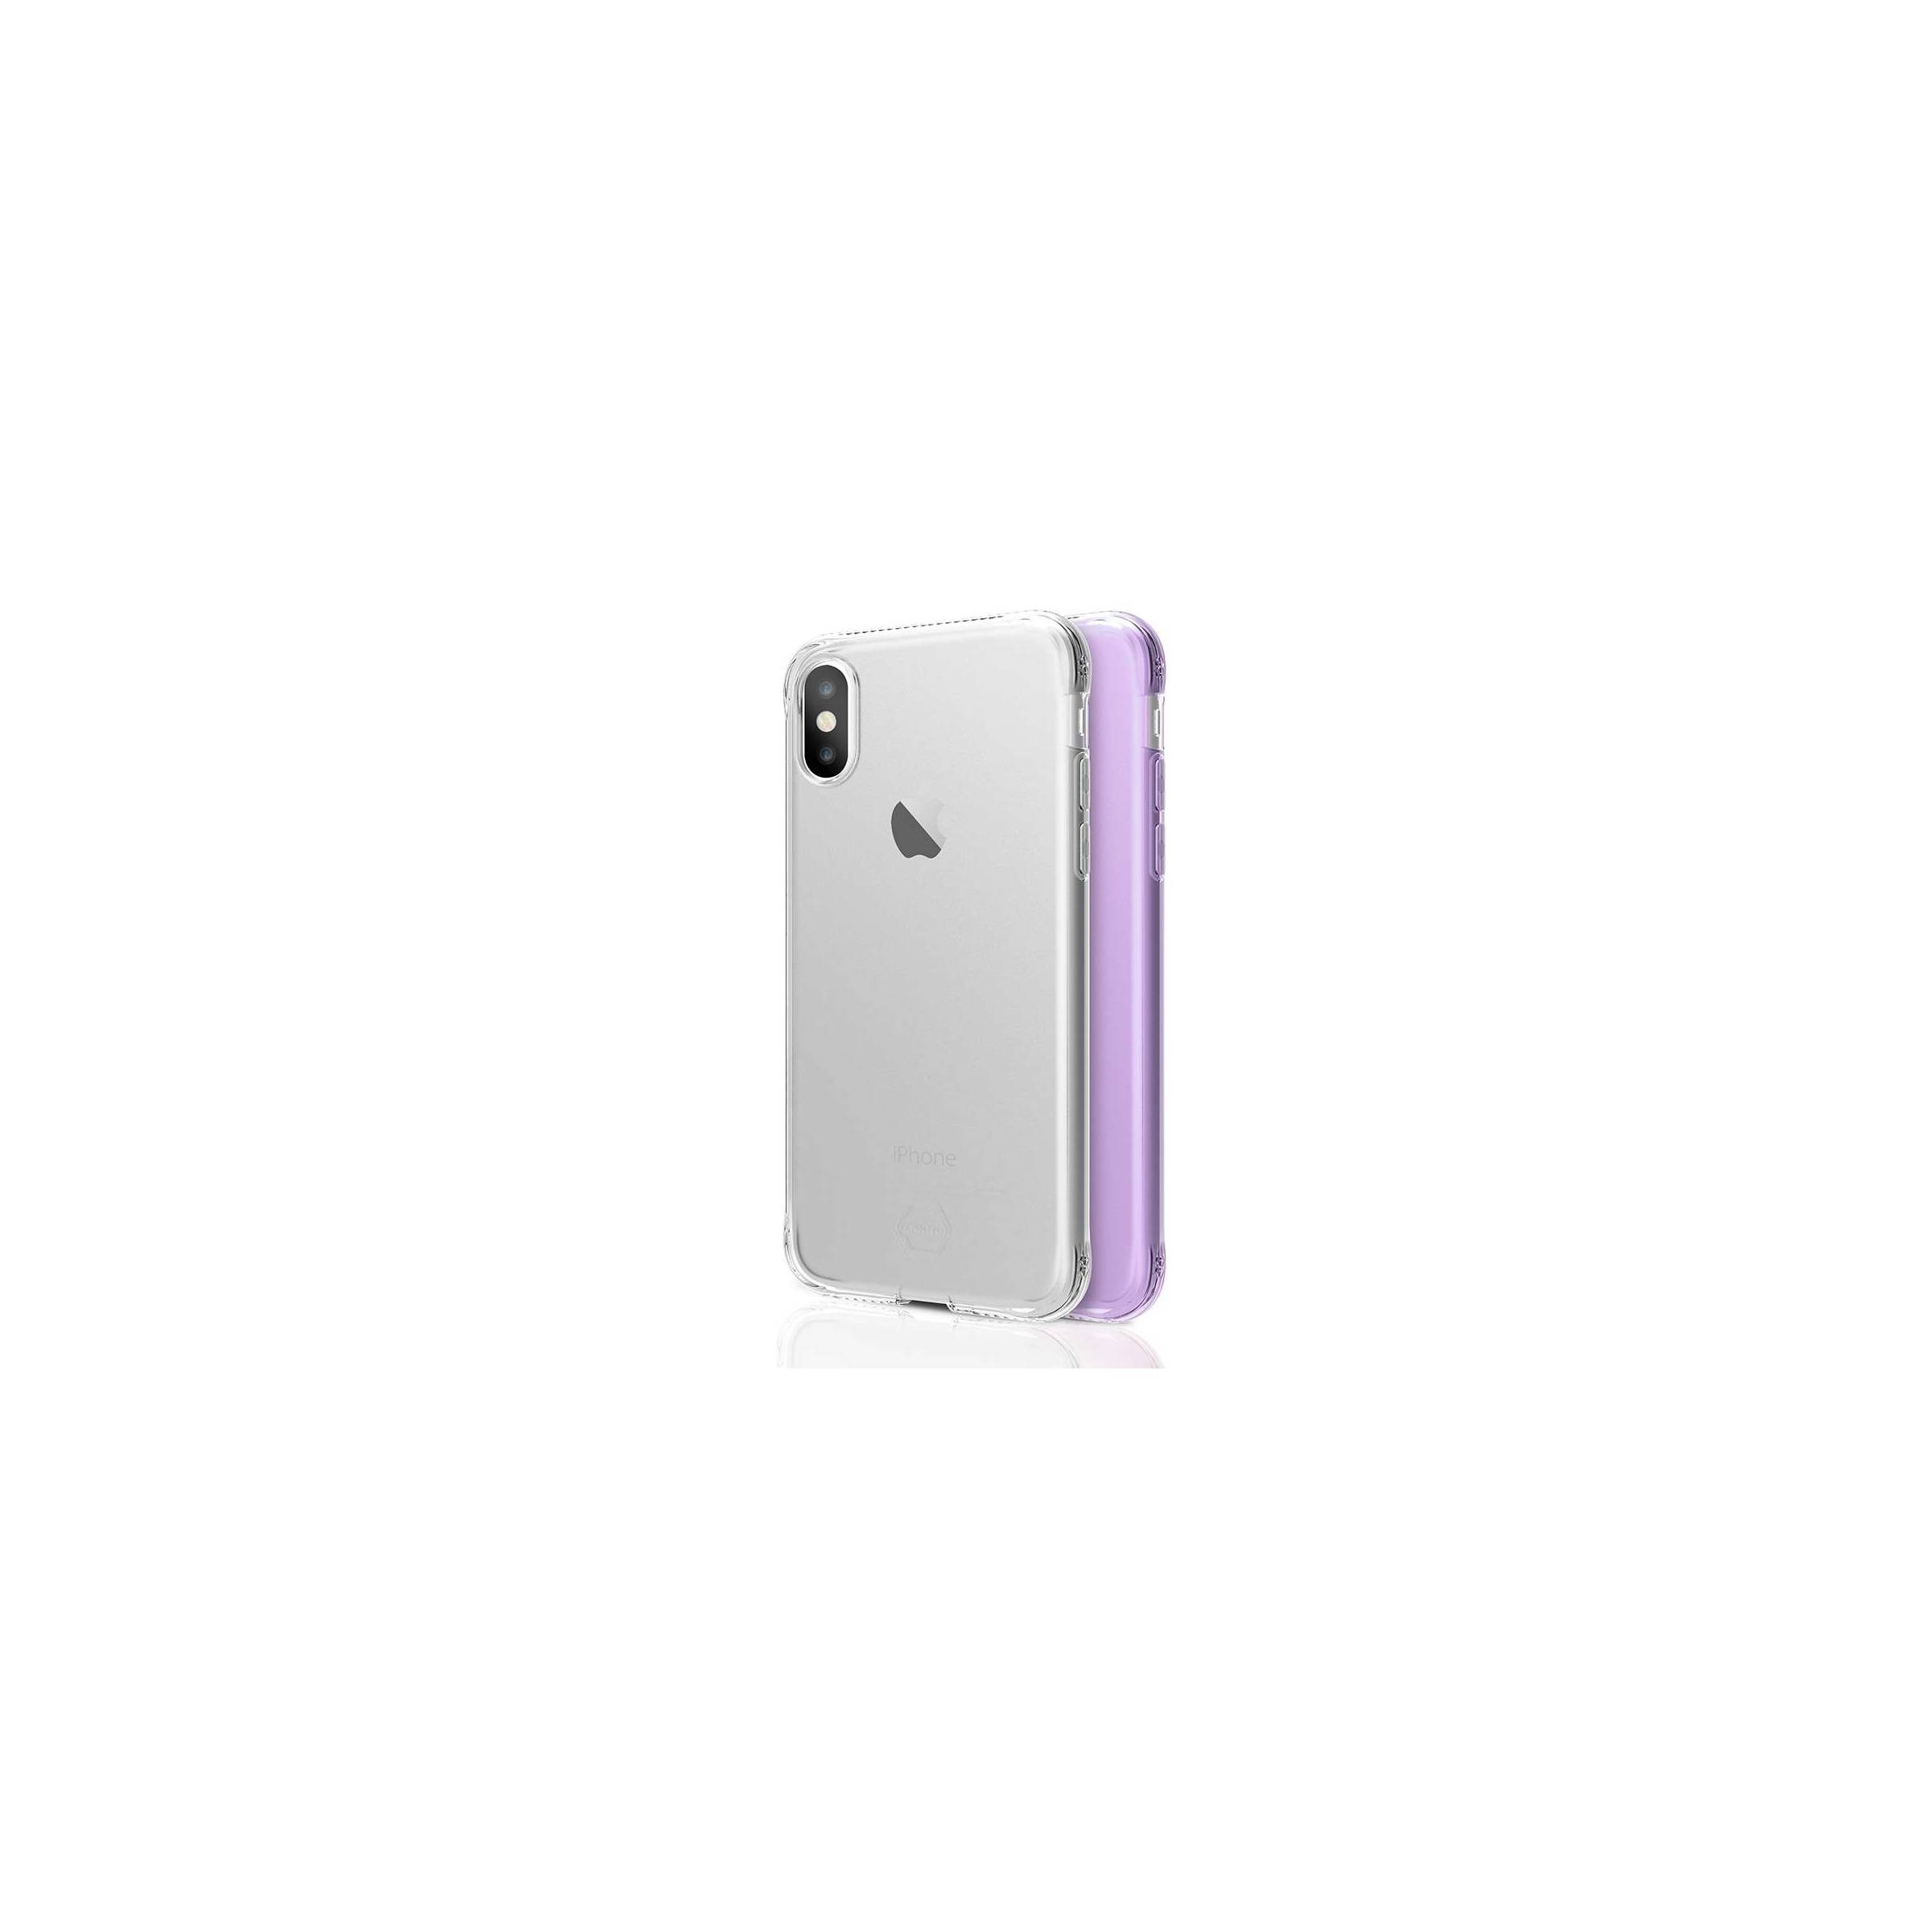 Bilde av Itskins Slim Silikon Protect Gel Iphone X/xs Deksel Dobbel 2x Pakke, Farge Klar & Lyse Lilla